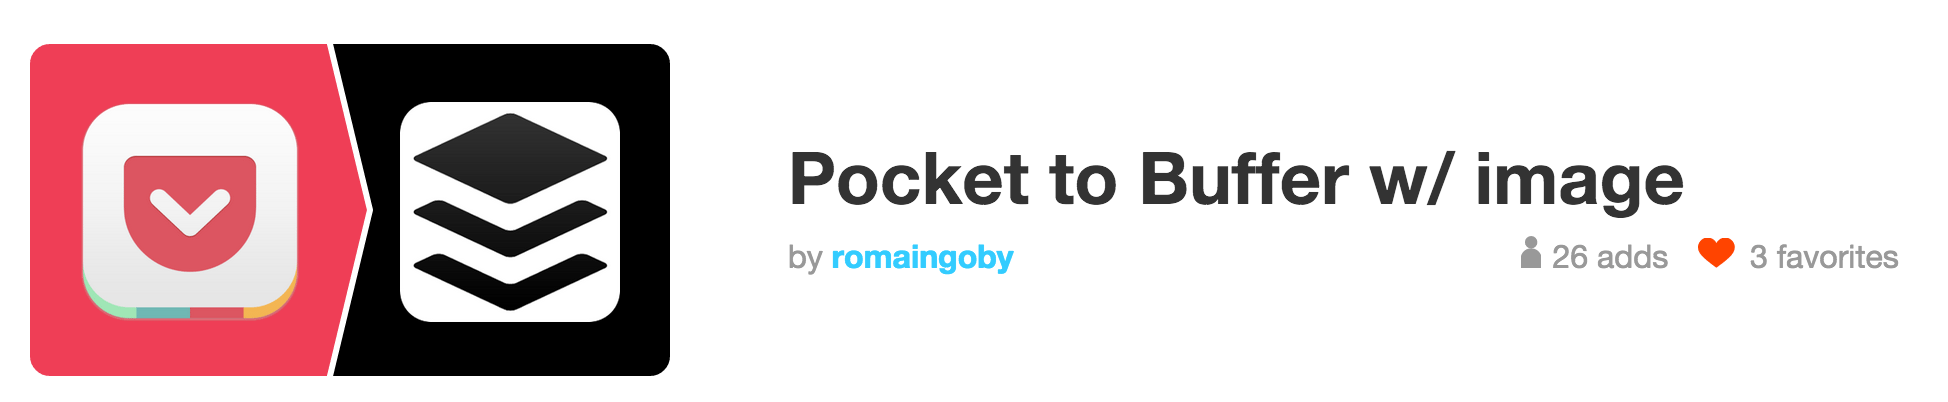 pocket to buffer